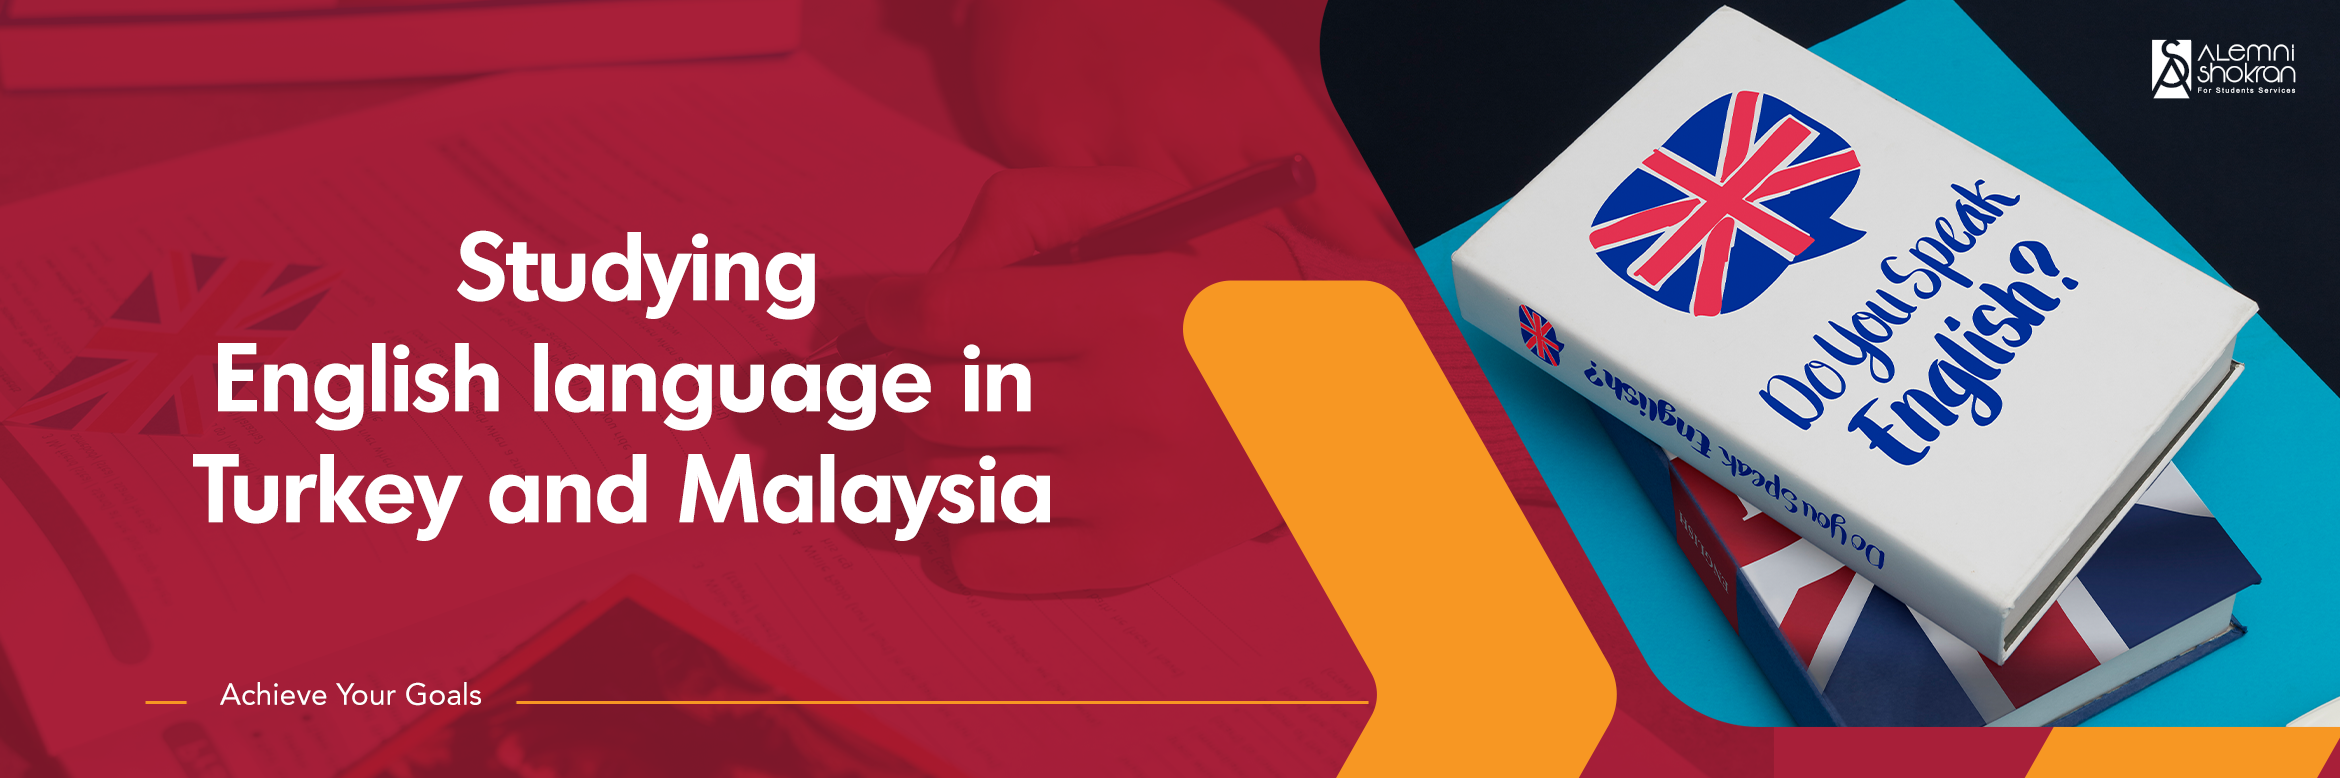 Studying-English-language-in-Turkey-and-Malaysia